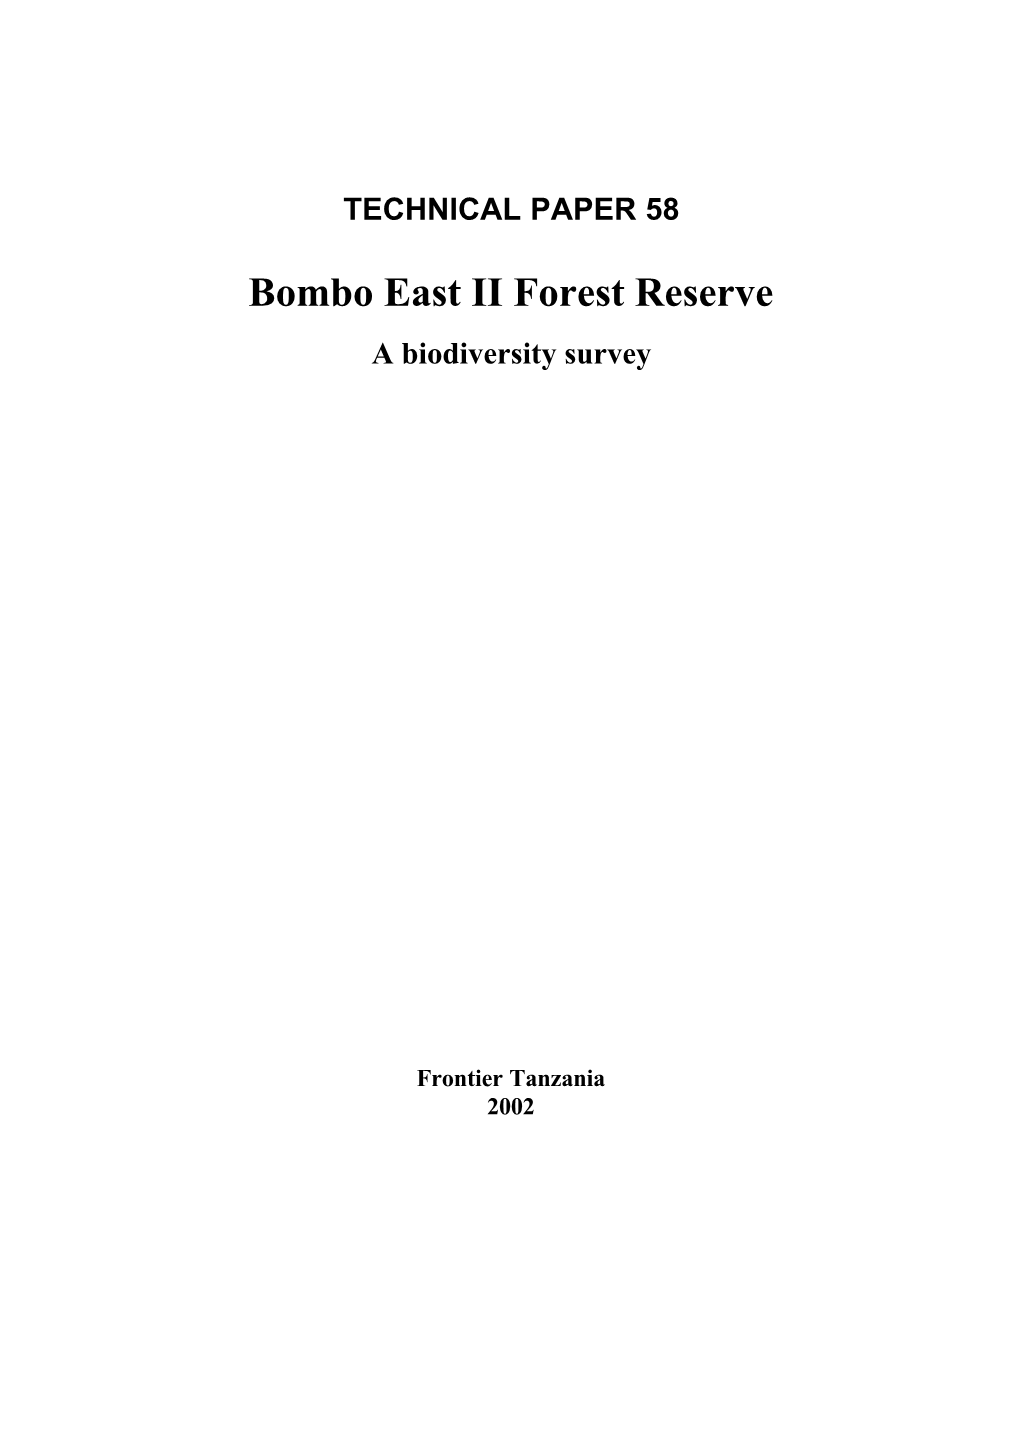 Bombo East II Forest Reserve a Biodiversity Survey